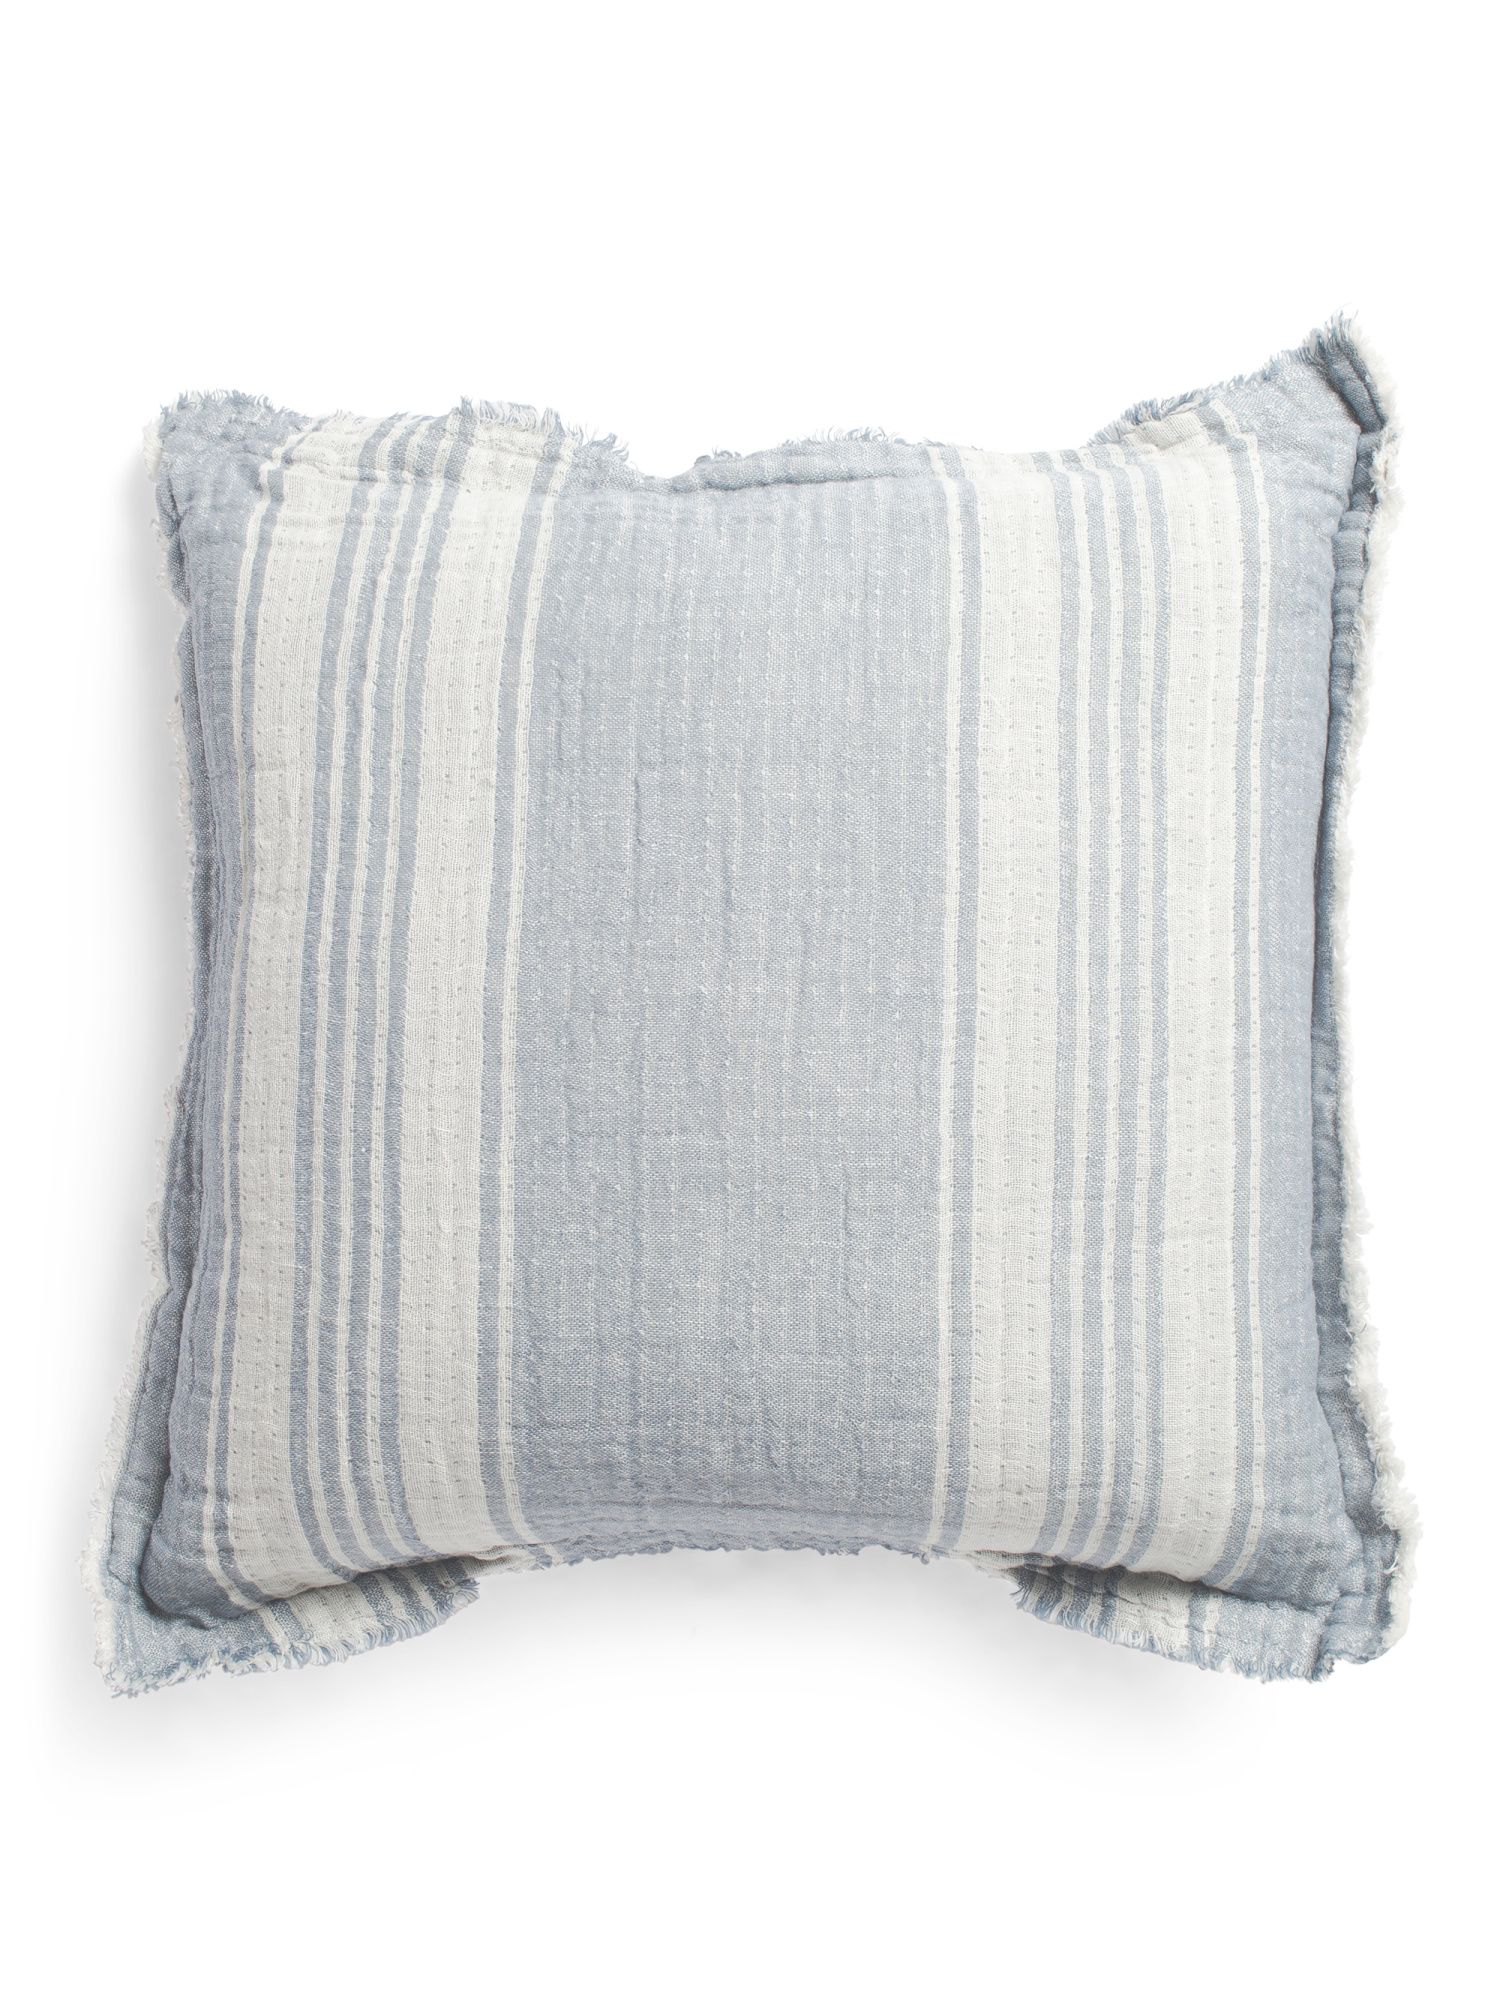 Made In India 20x20 Woven Stripe Pillow | TJ Maxx